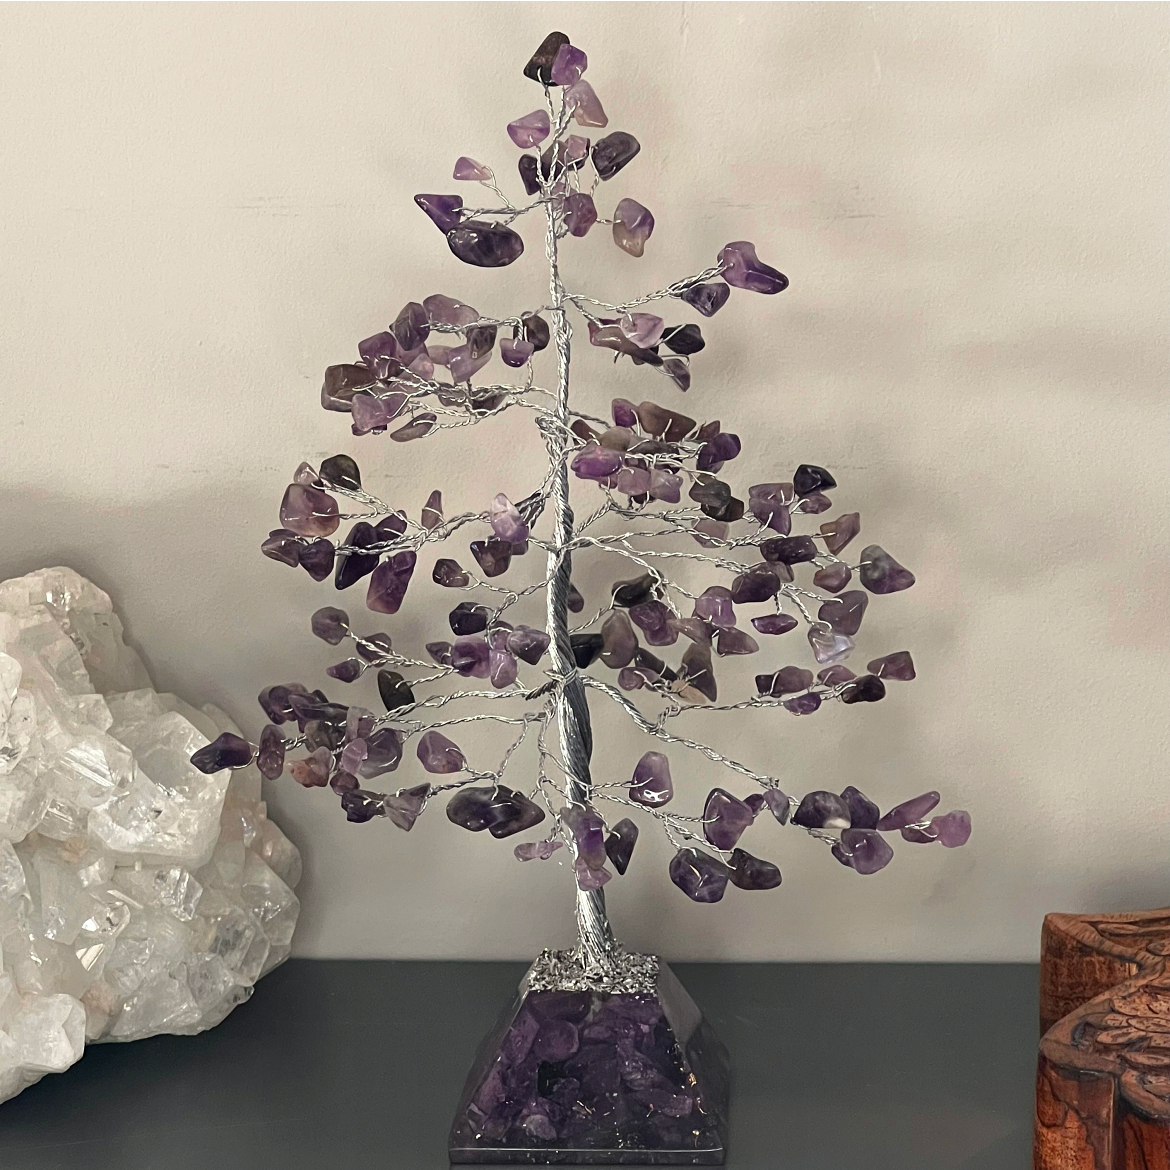 Amethyst Crystal Tree